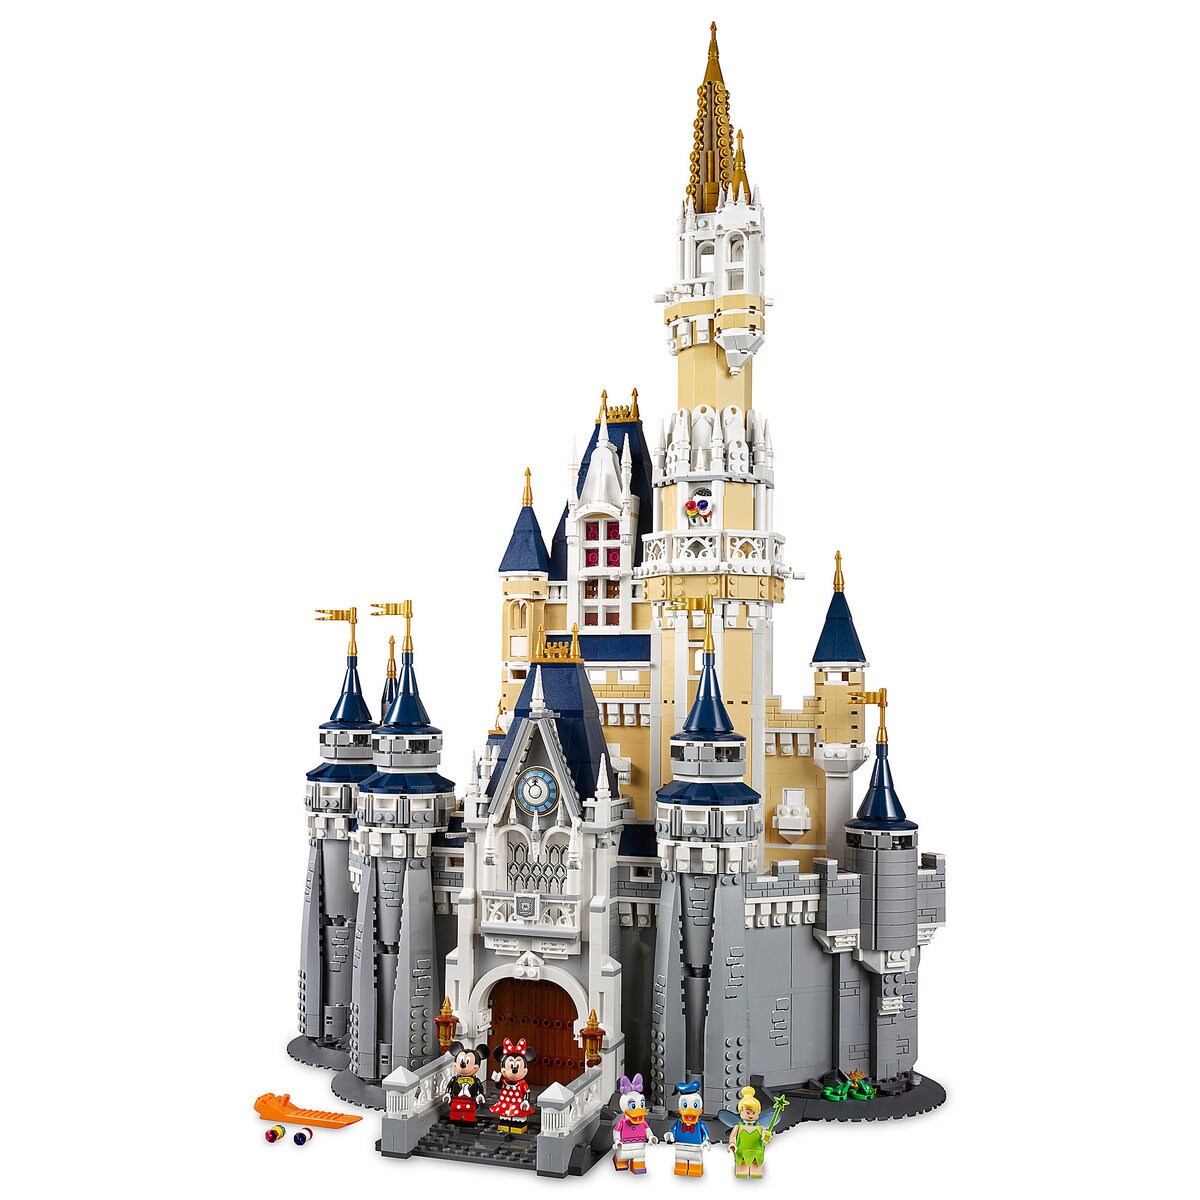 Disney Store Disney World buildable LEGO sets